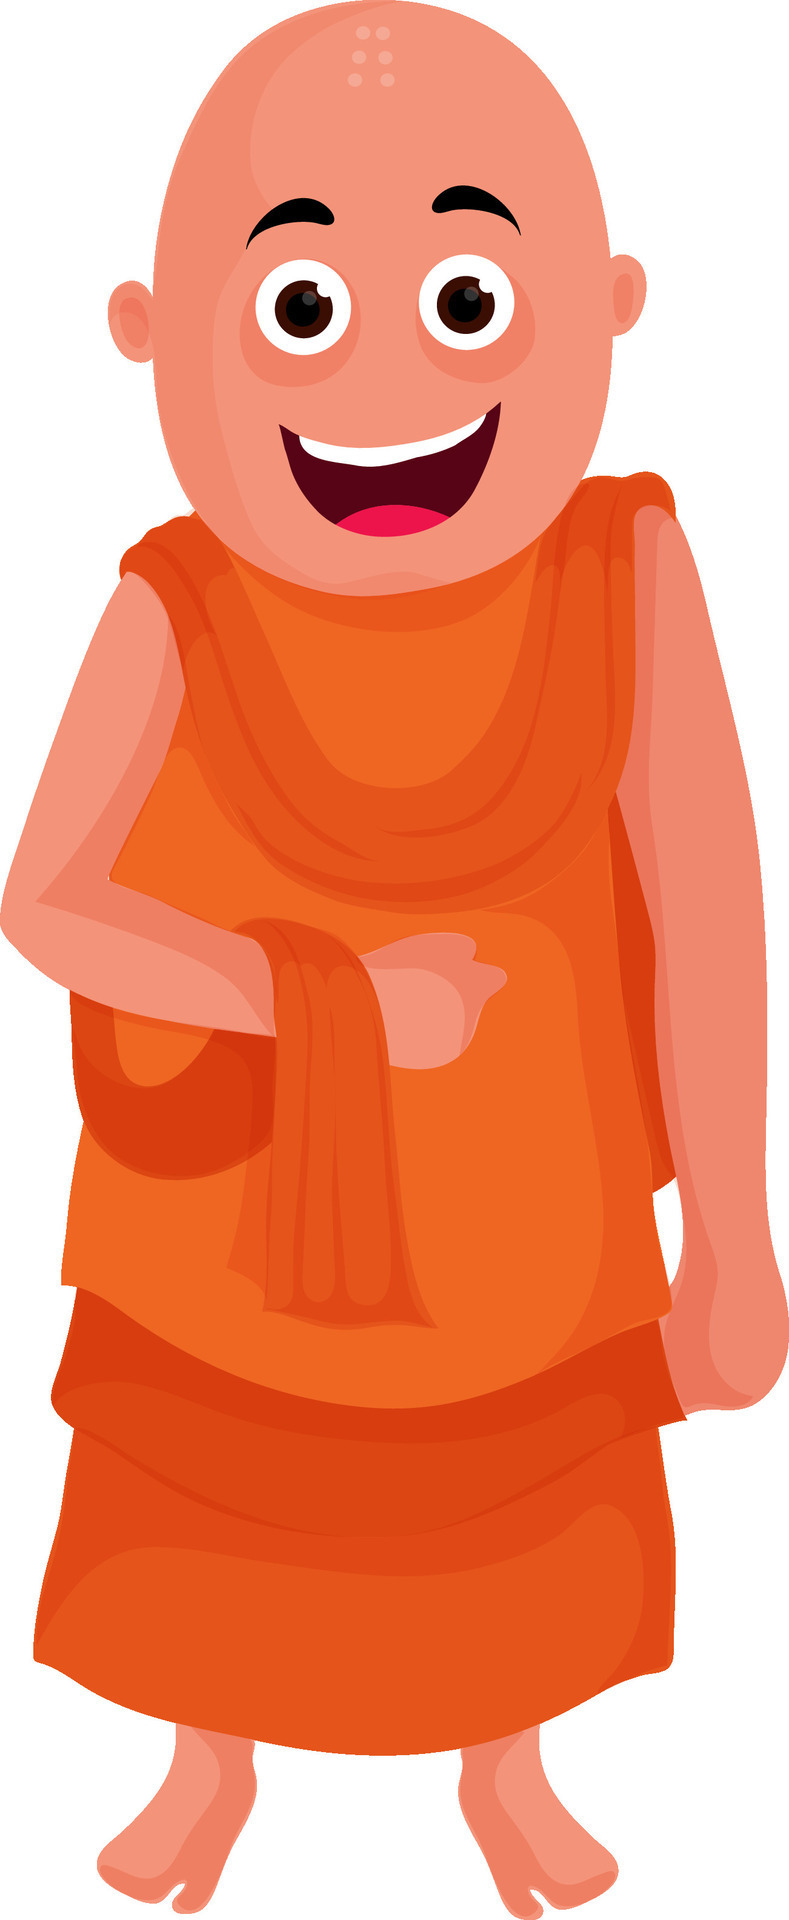 https://static.vecteezy.com/system/resources/previews/027/680/807/original/cartoon-character-of-a-buddhist-monk-vector.jpg